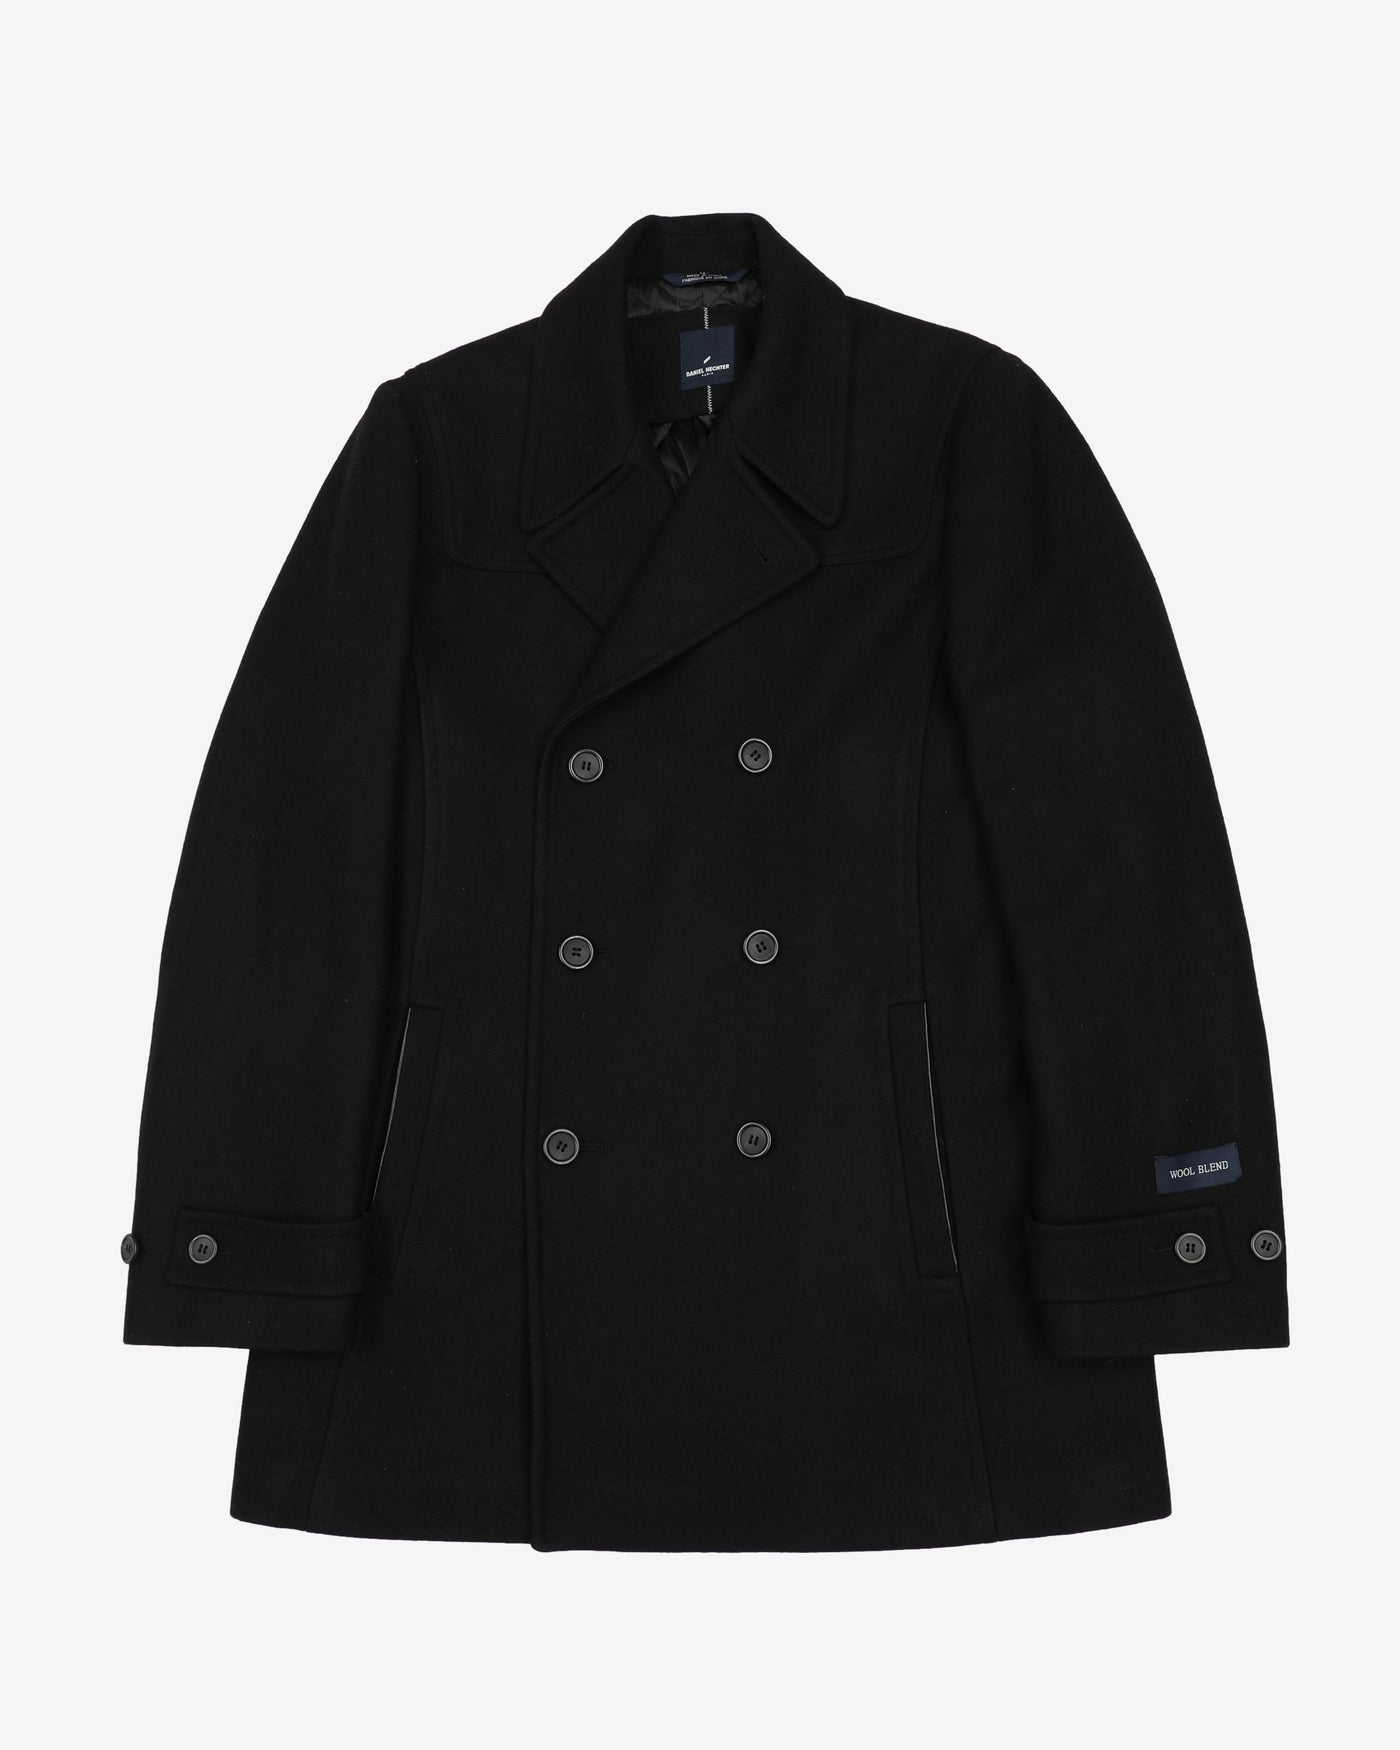 Black Wool Blend Jacket Overcoat - S